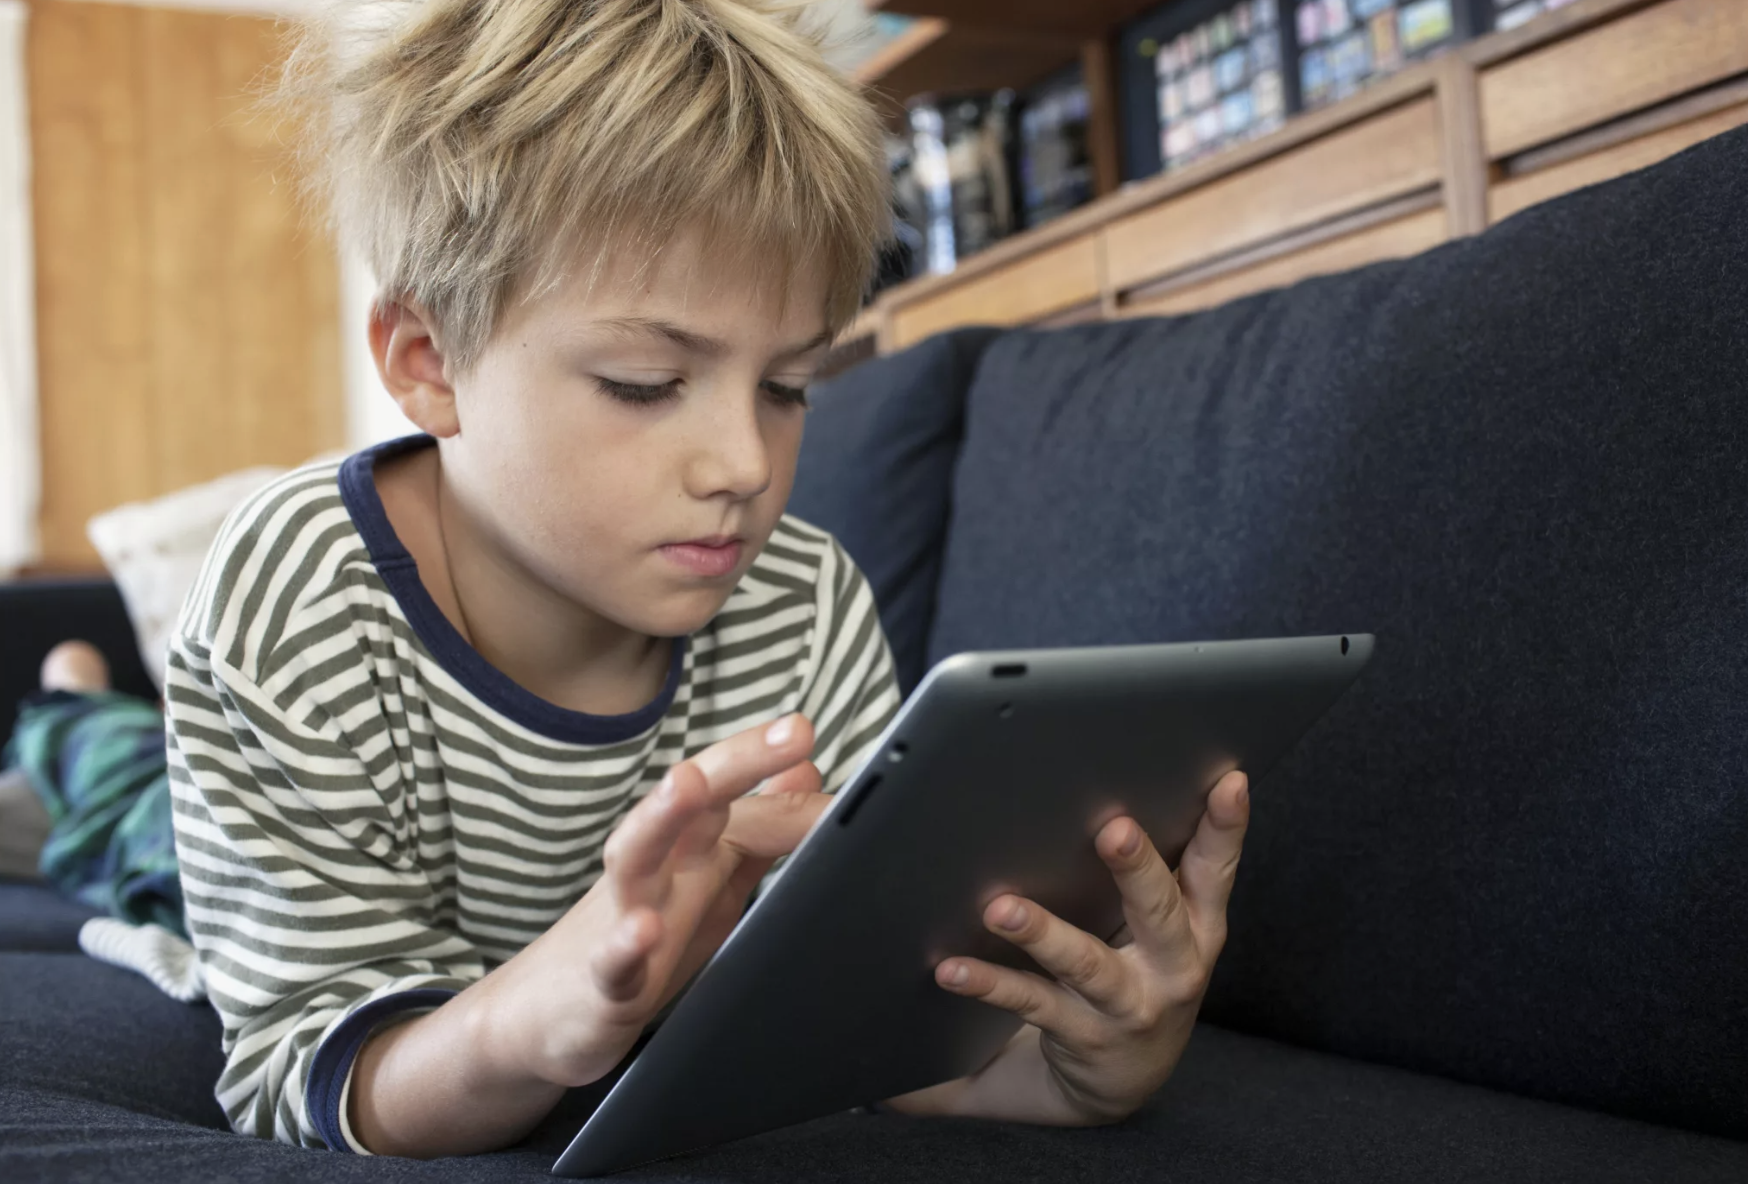 Boy engrossed in a tablet | Source: Shutterstock